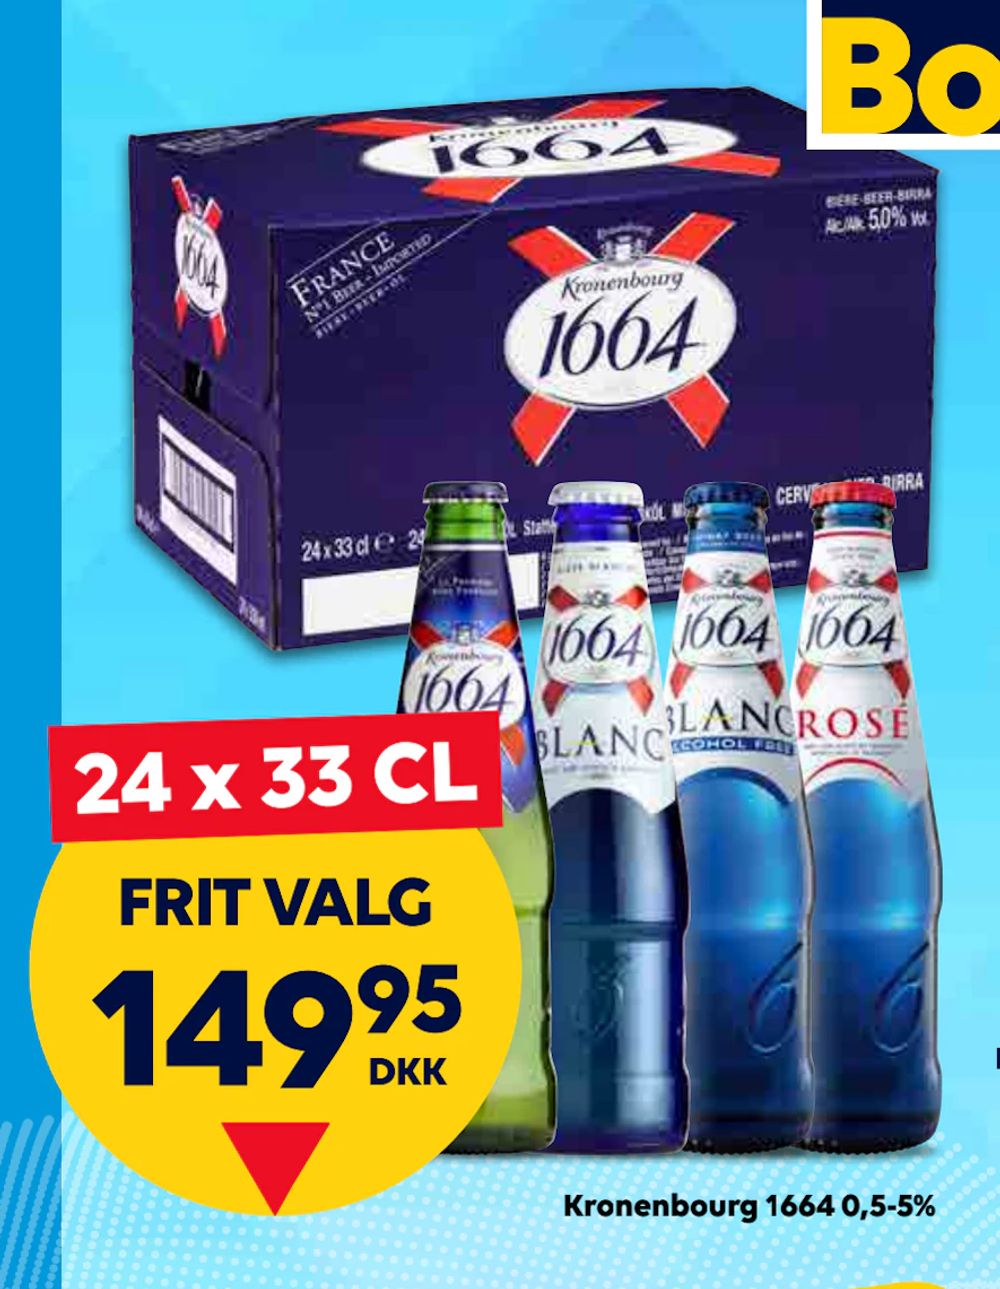 Deals on Kronenbourg 1664 0,5-5% from BorderShop at 149,95 kr.